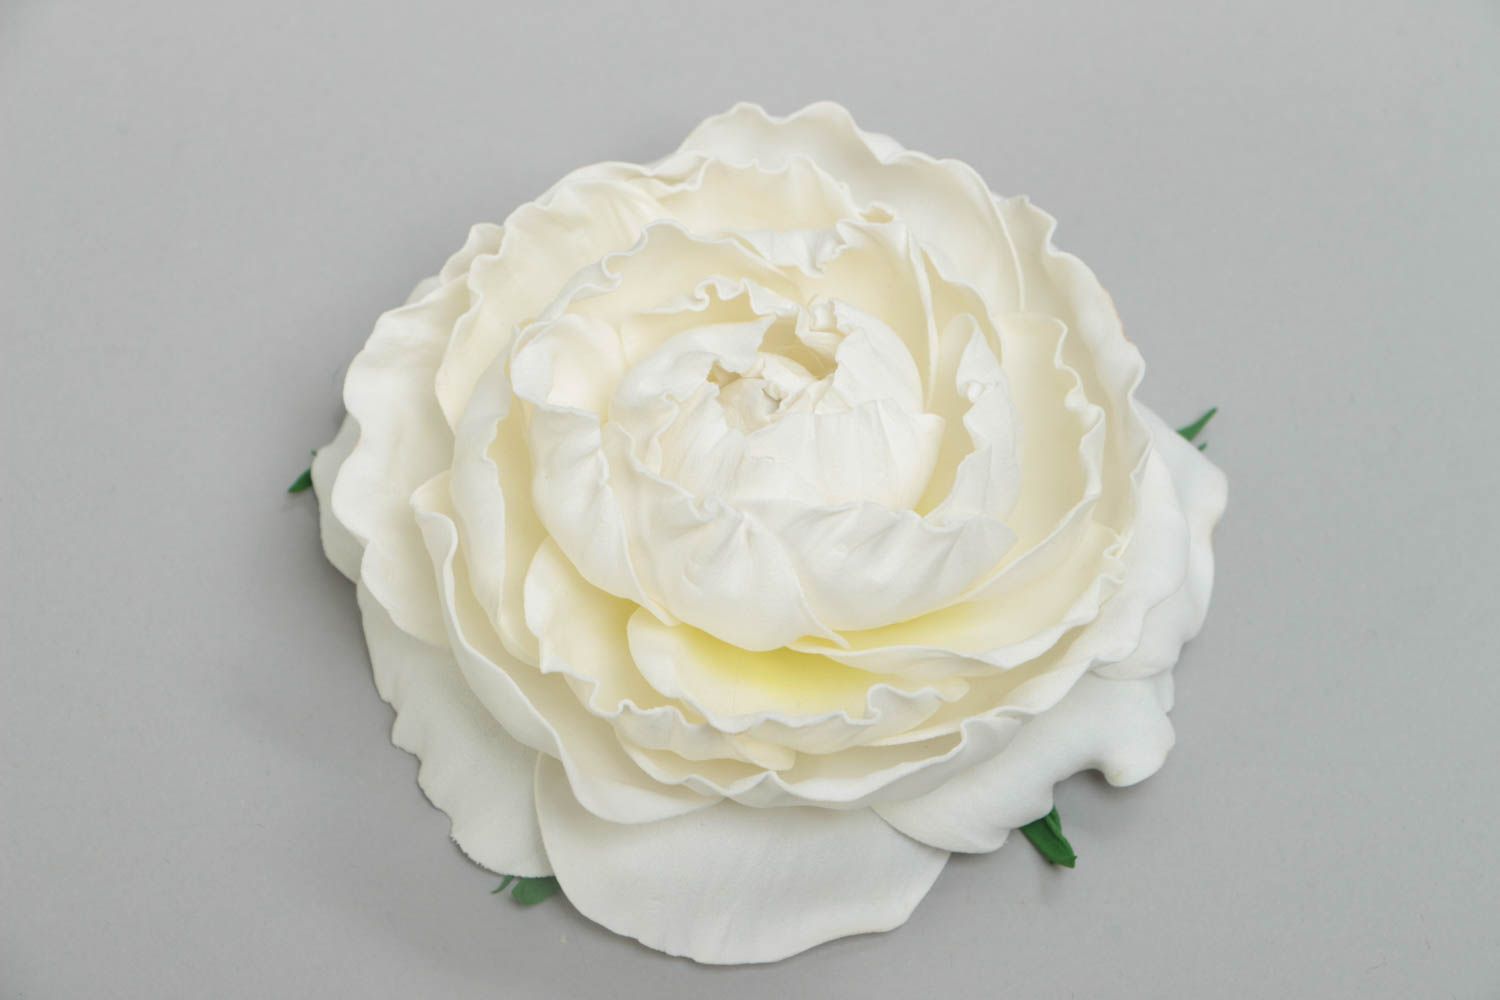 Fornitura para broche artesanal con forma de flor de goma EVA rosa blanca foto 2